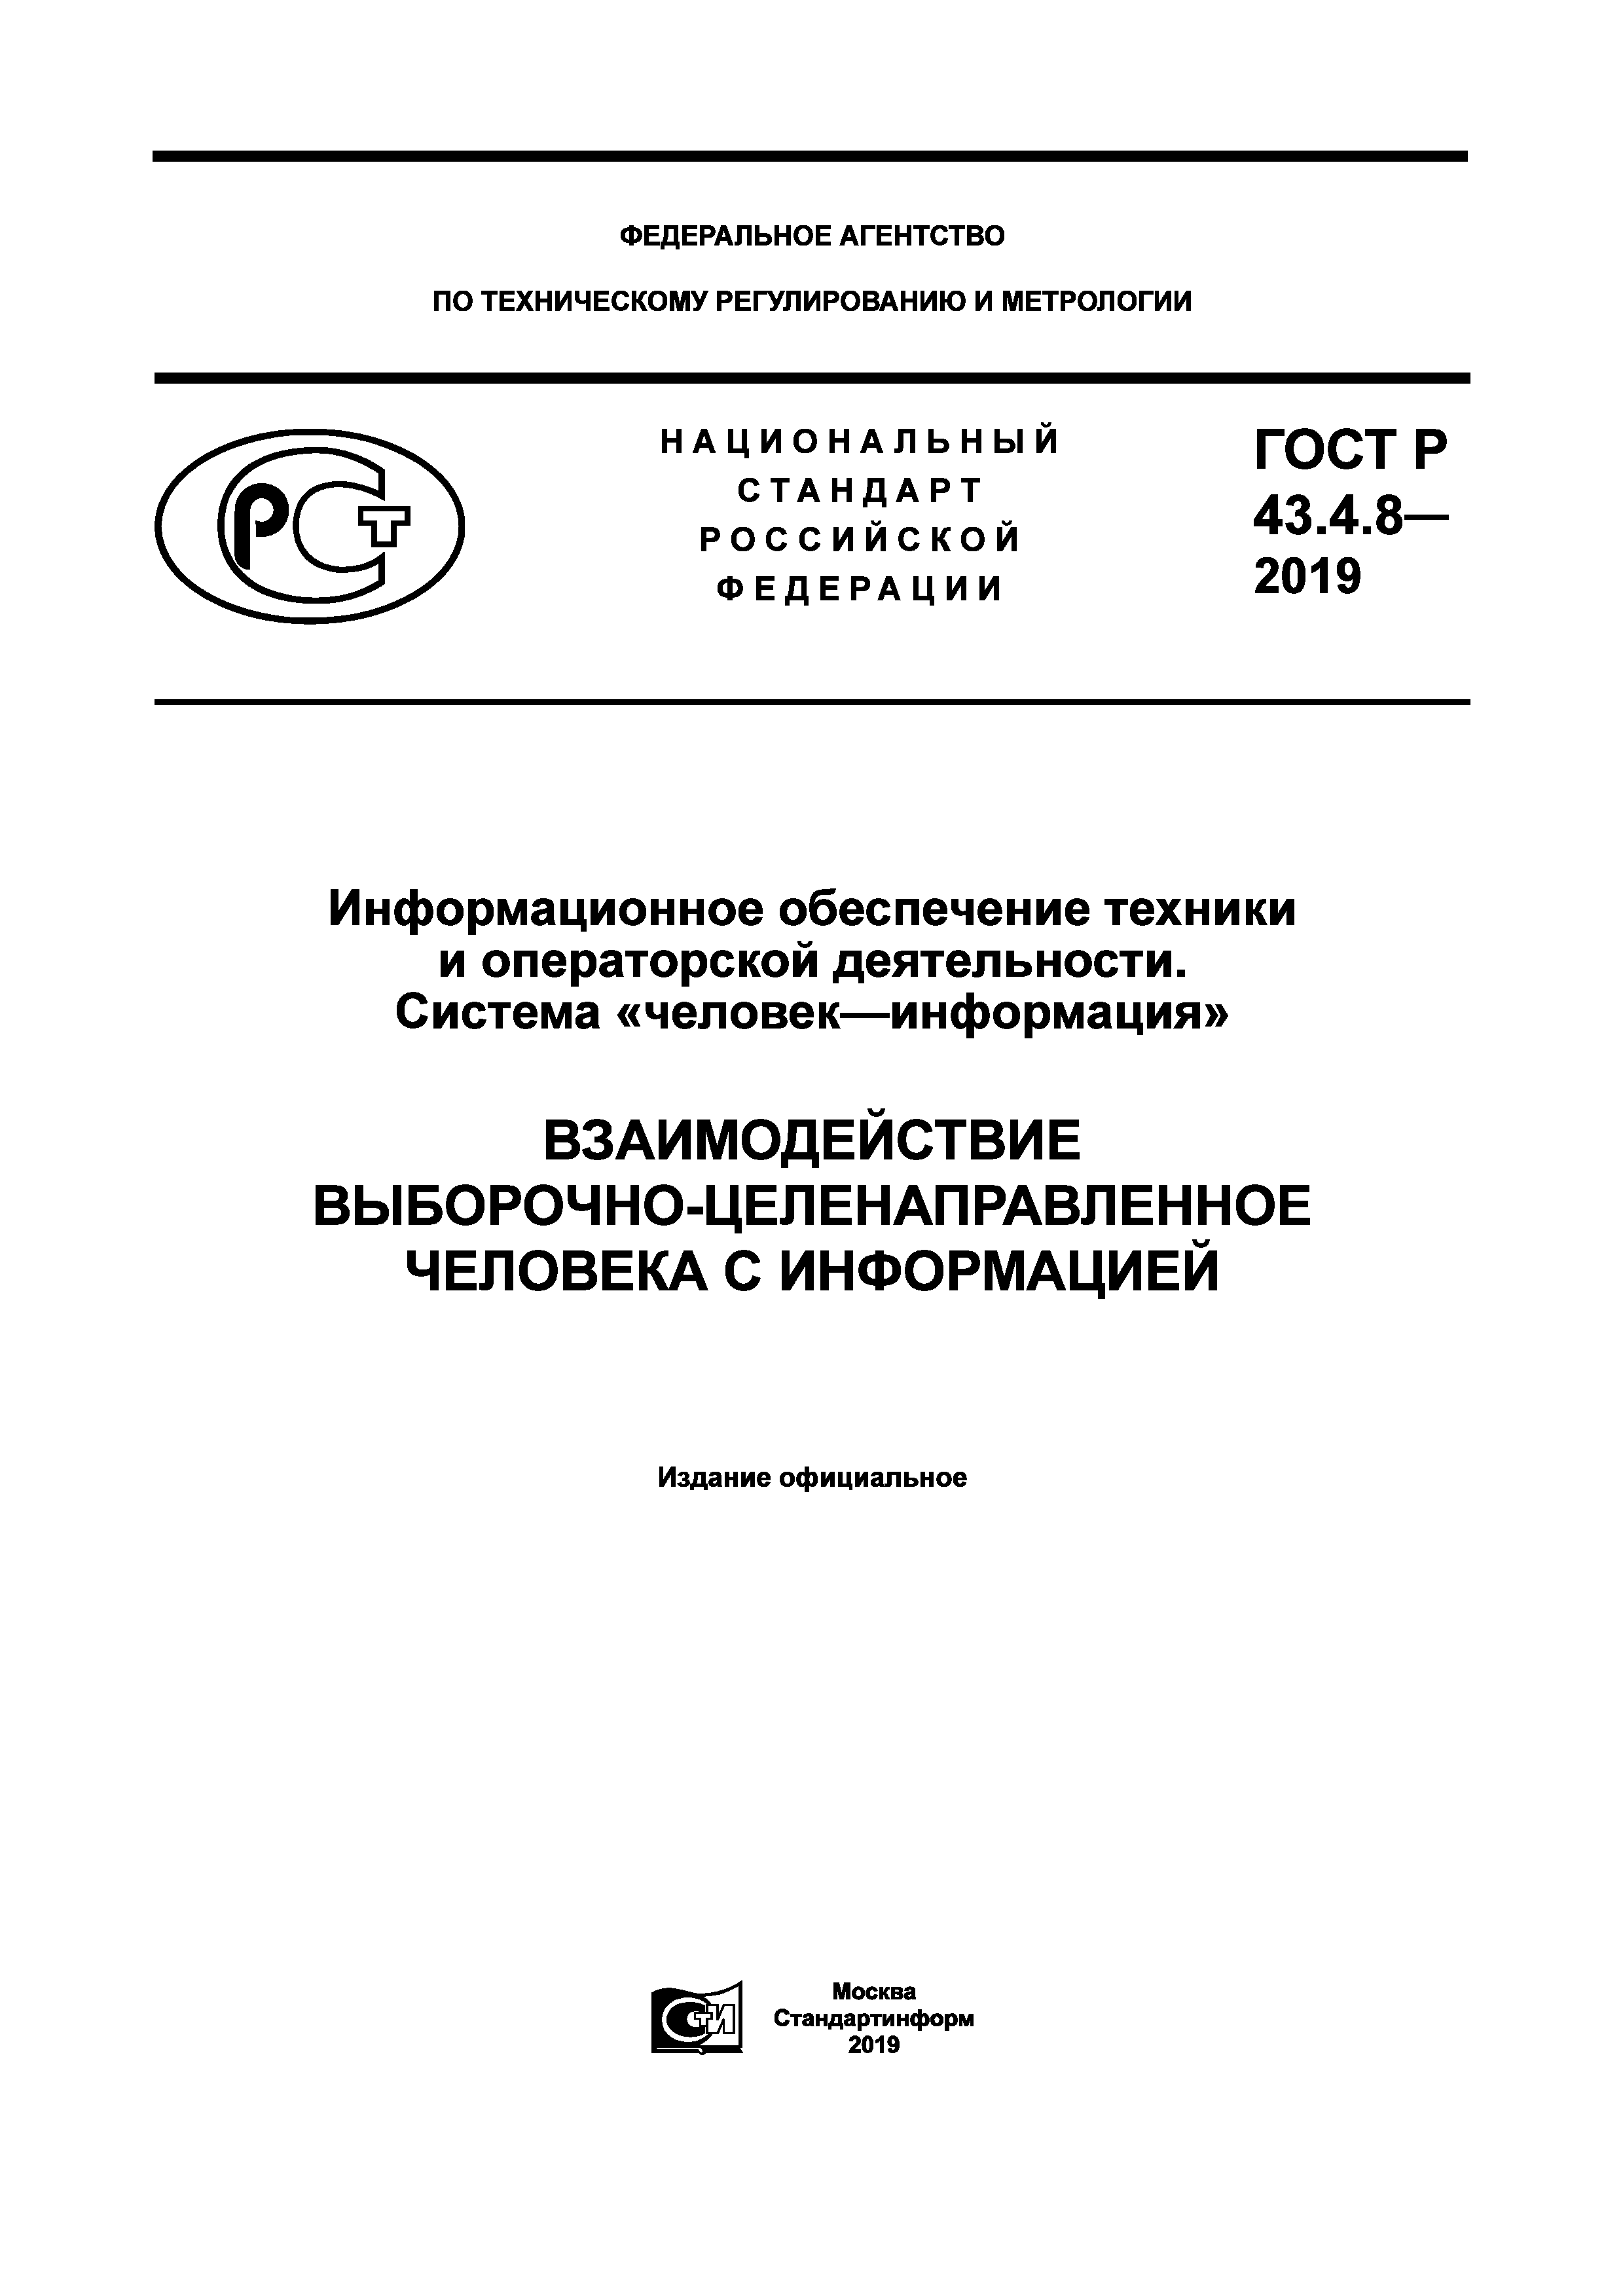 ГОСТ Р 43.4.8-2019